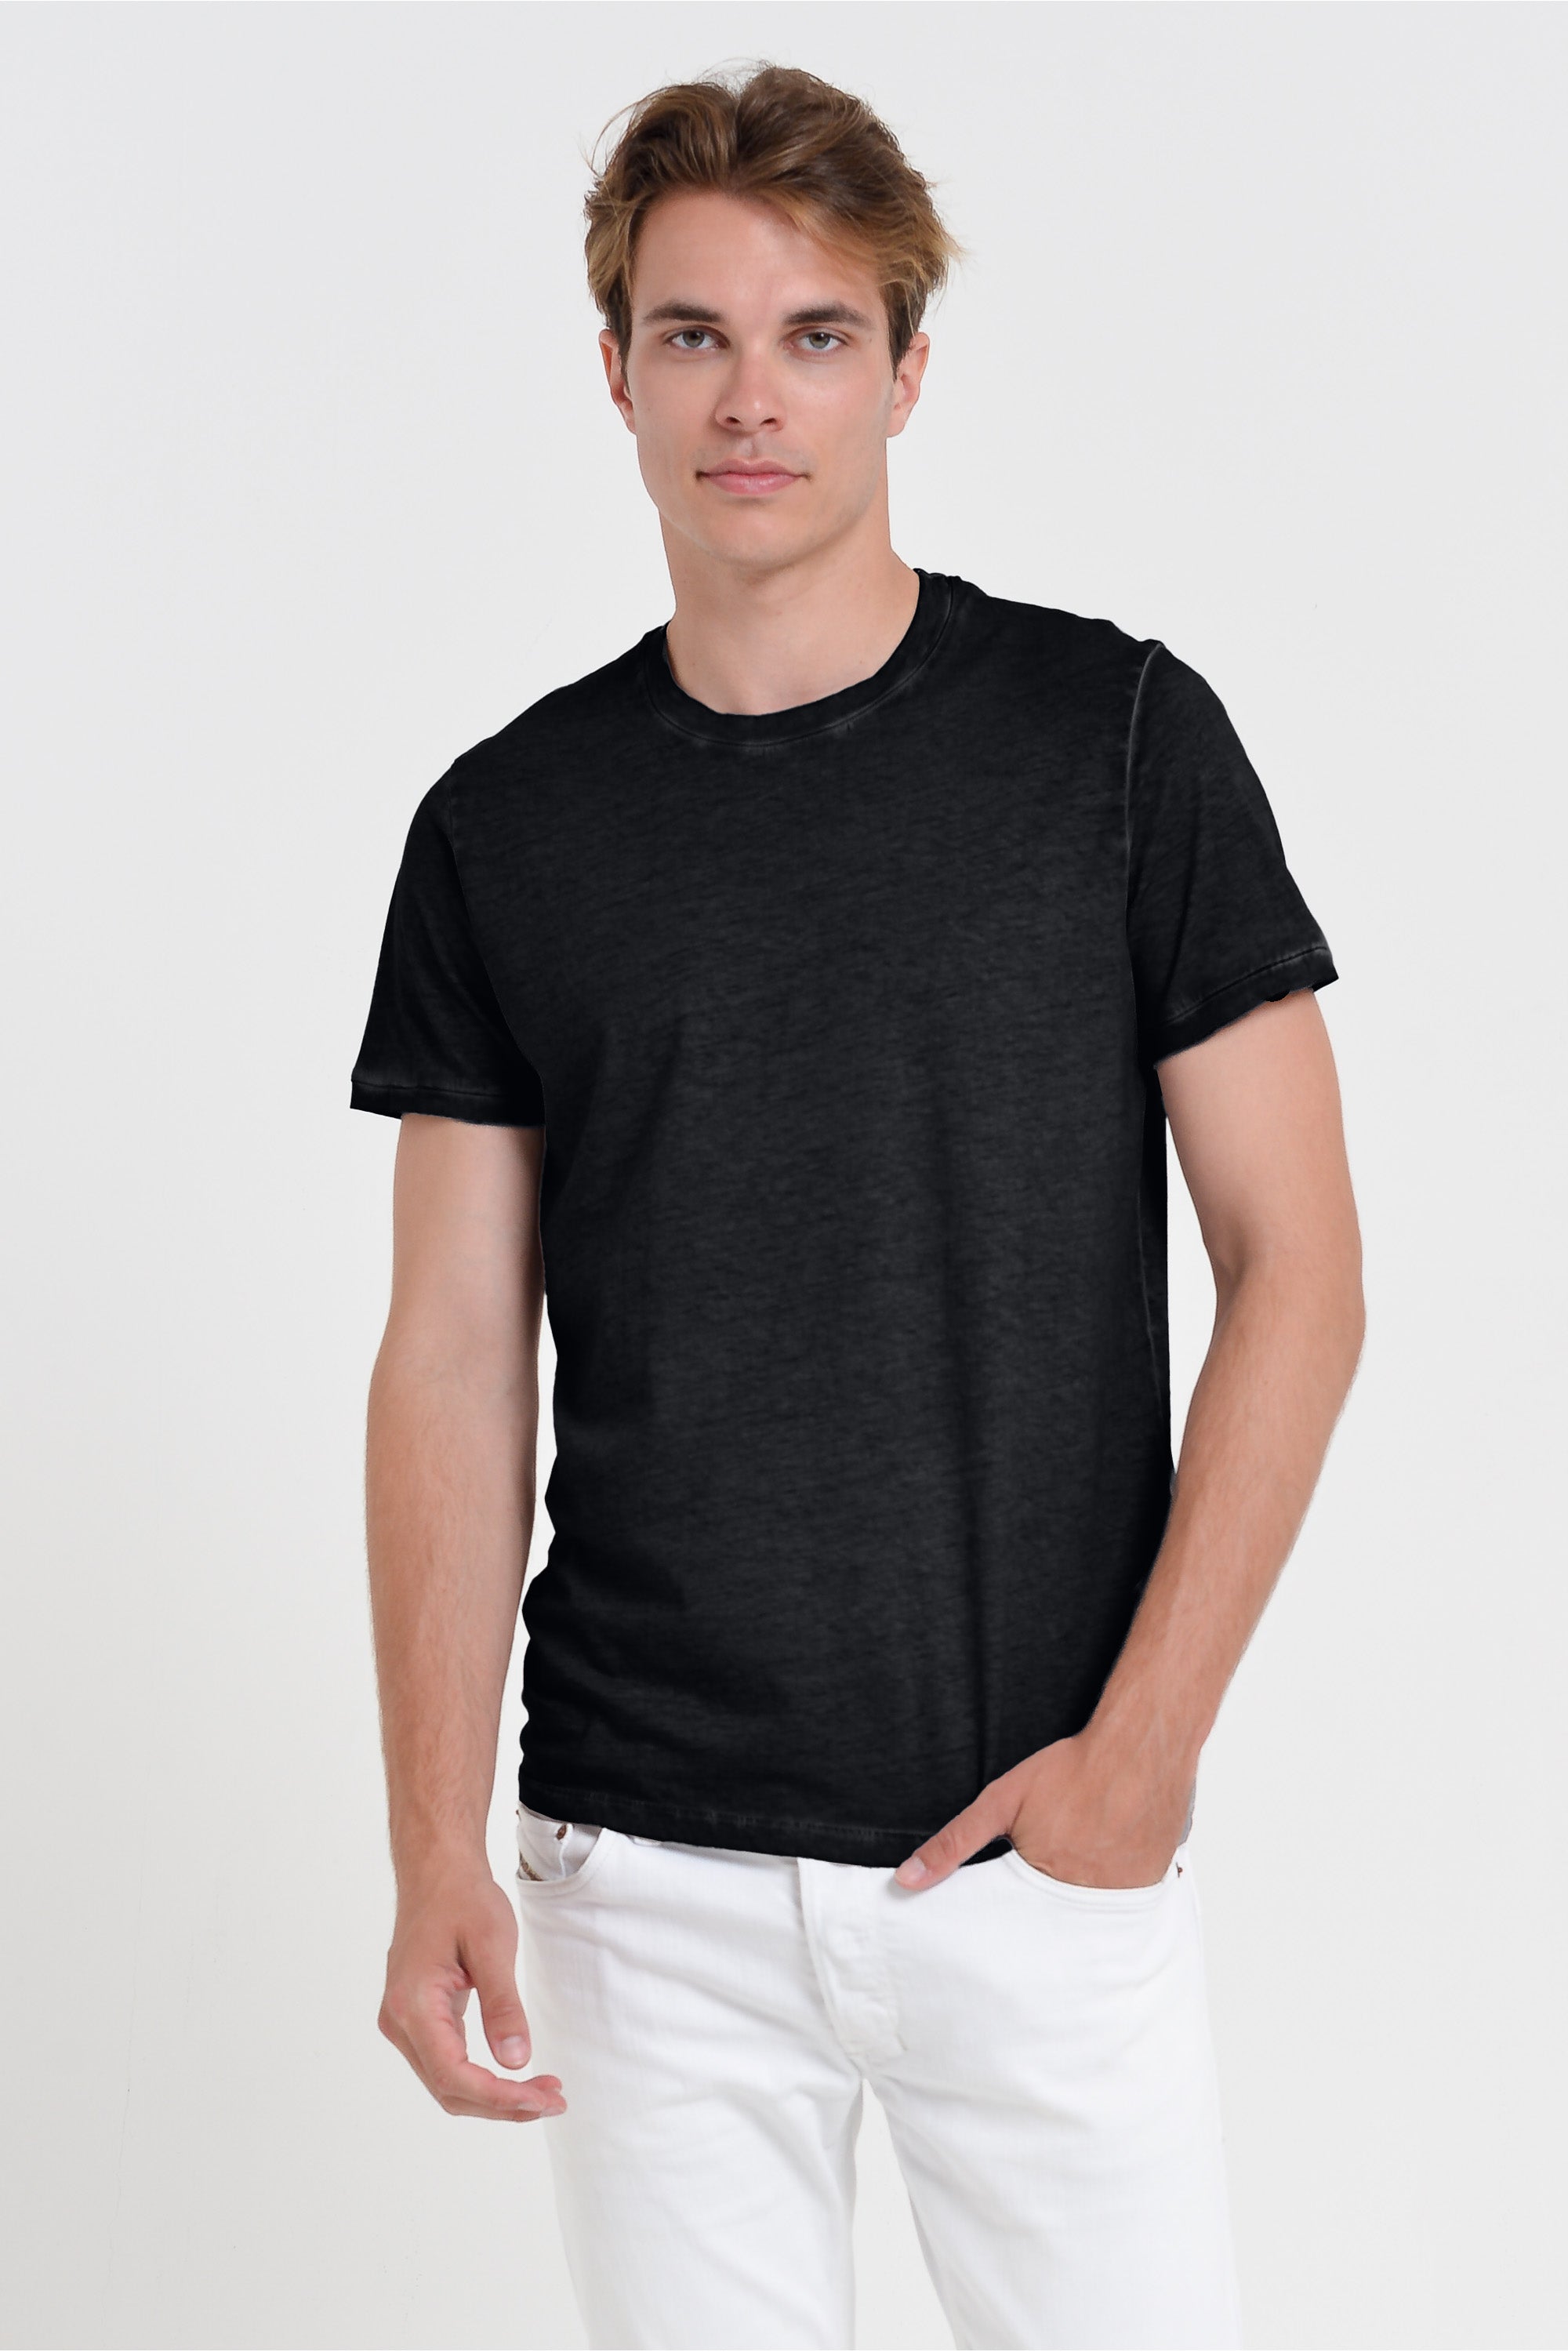 Smart Casual Cotton T-Shirt - Tonga